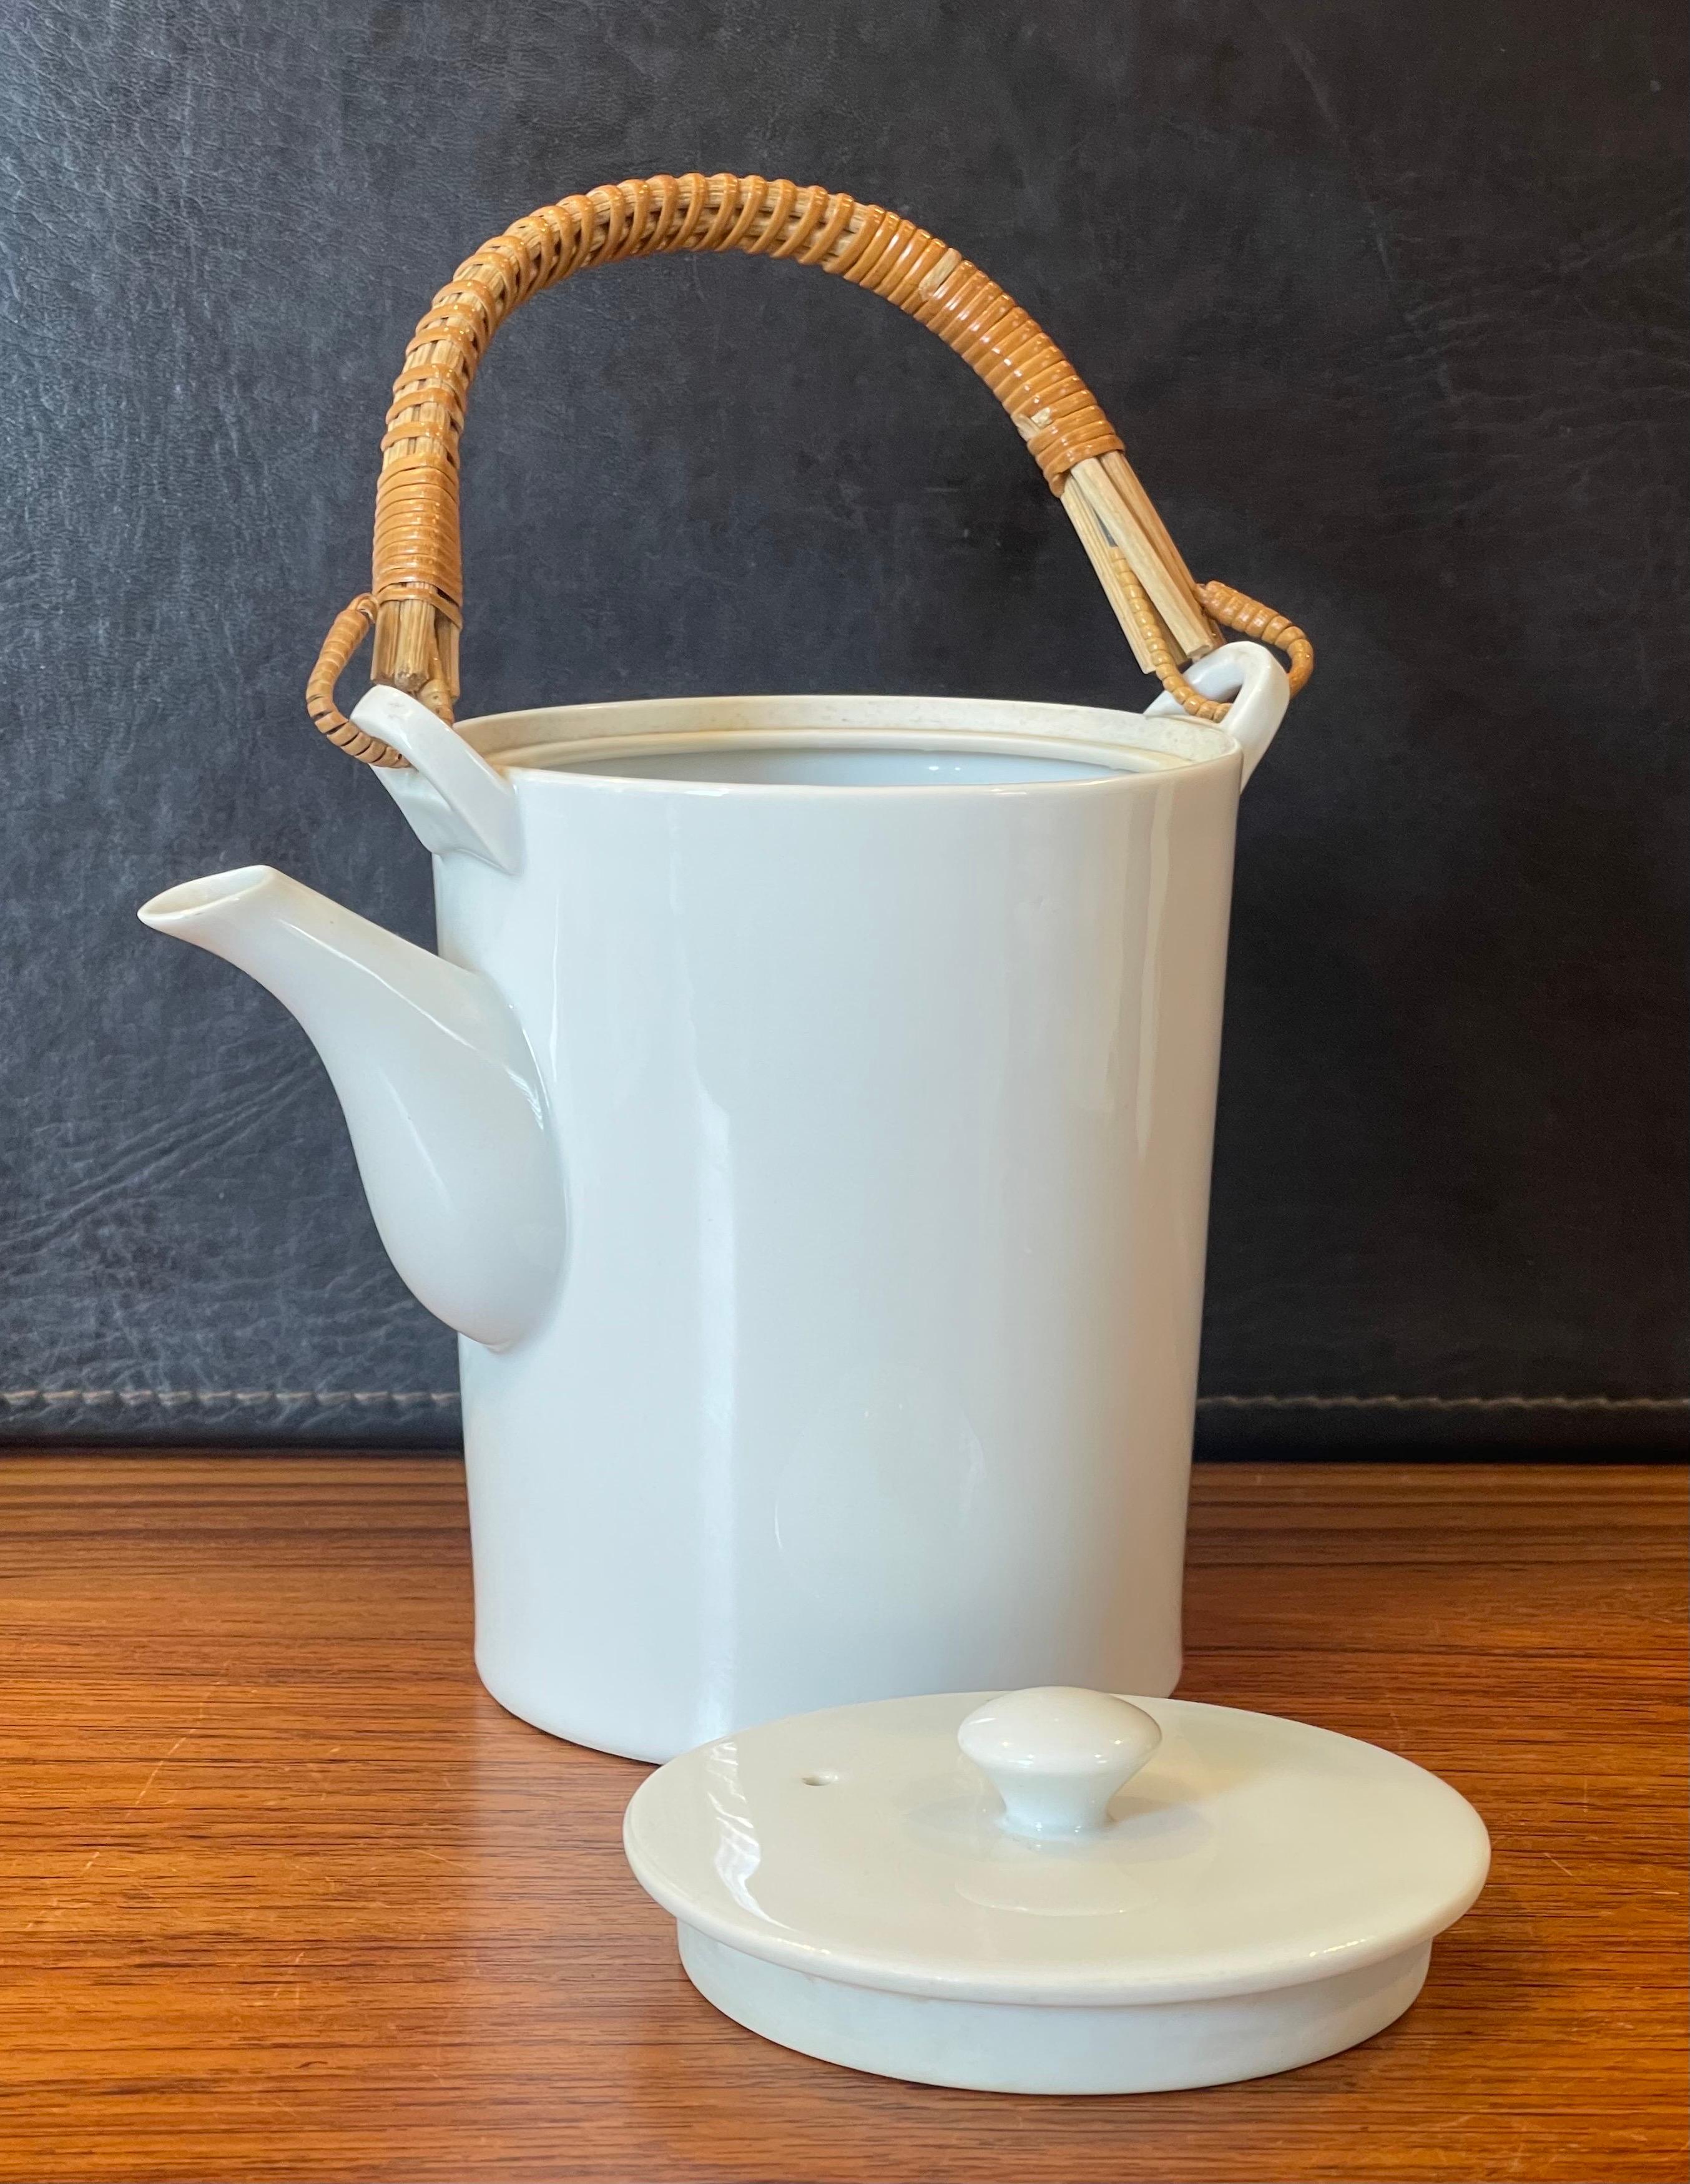 20th Century White Porcelain & Cane Handle Teapot by Kenji Fujita for Freeman Lederman